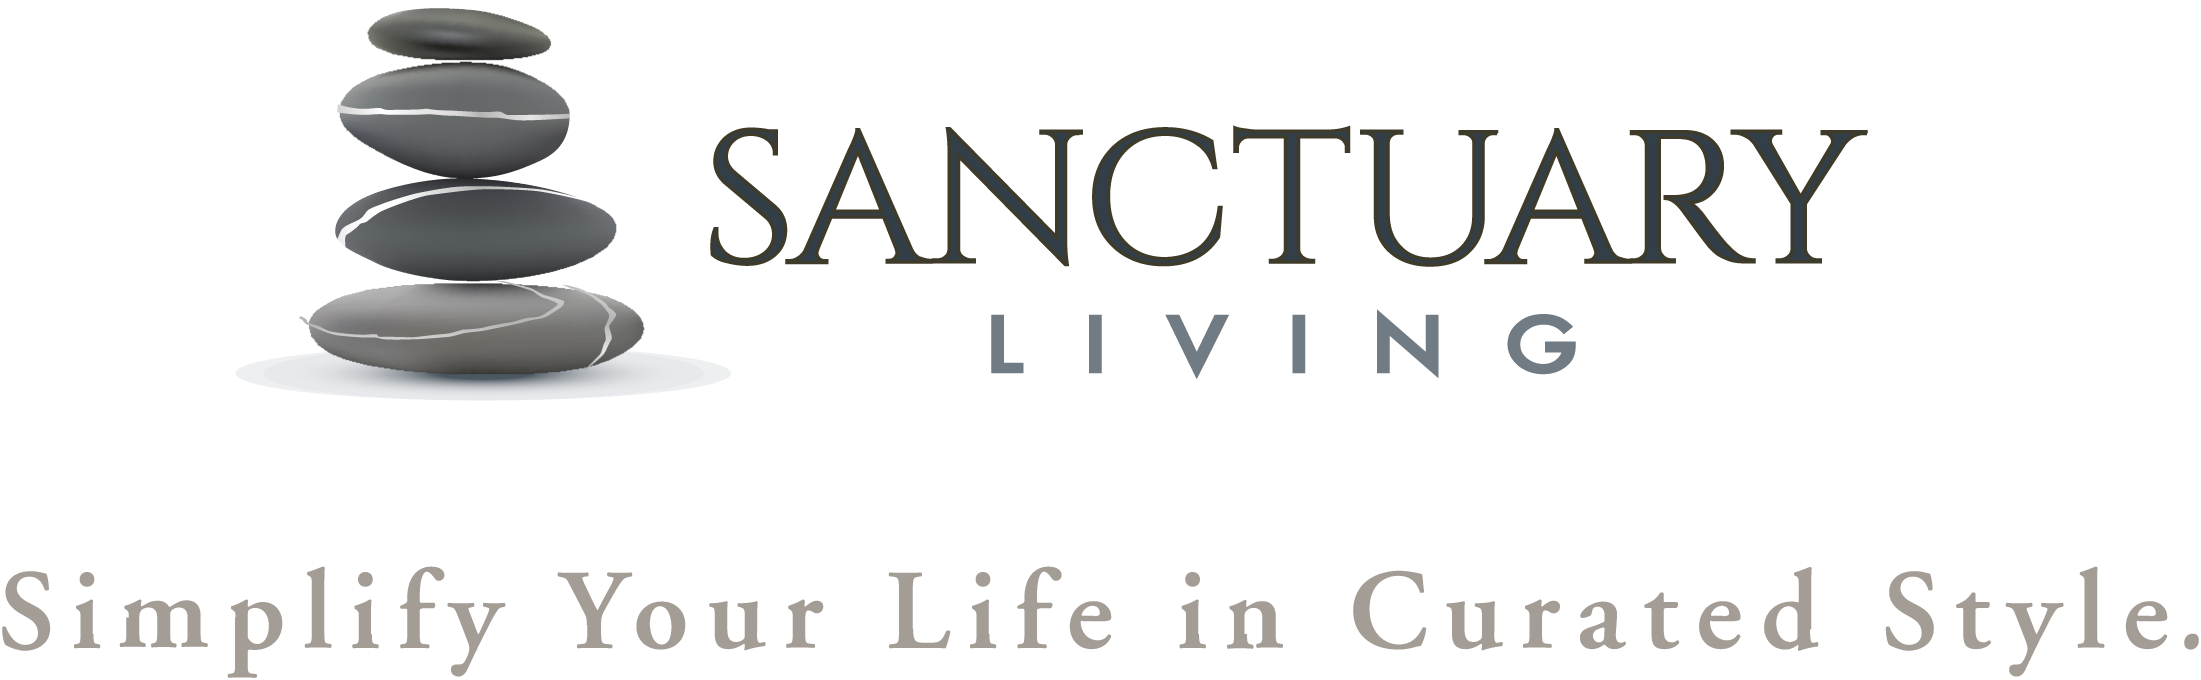 Sanctuary Living LOGO